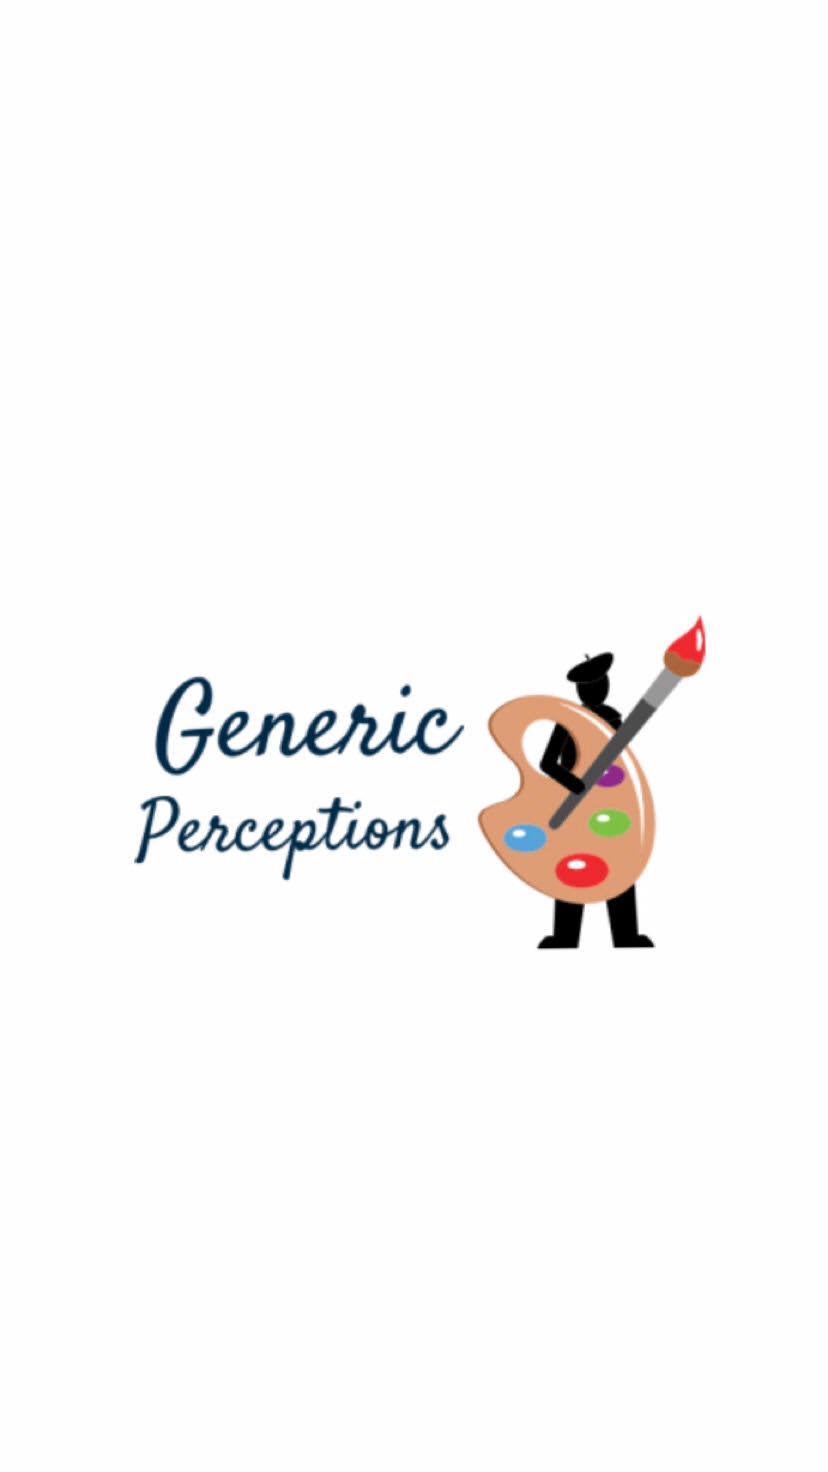 Generic Perceptions